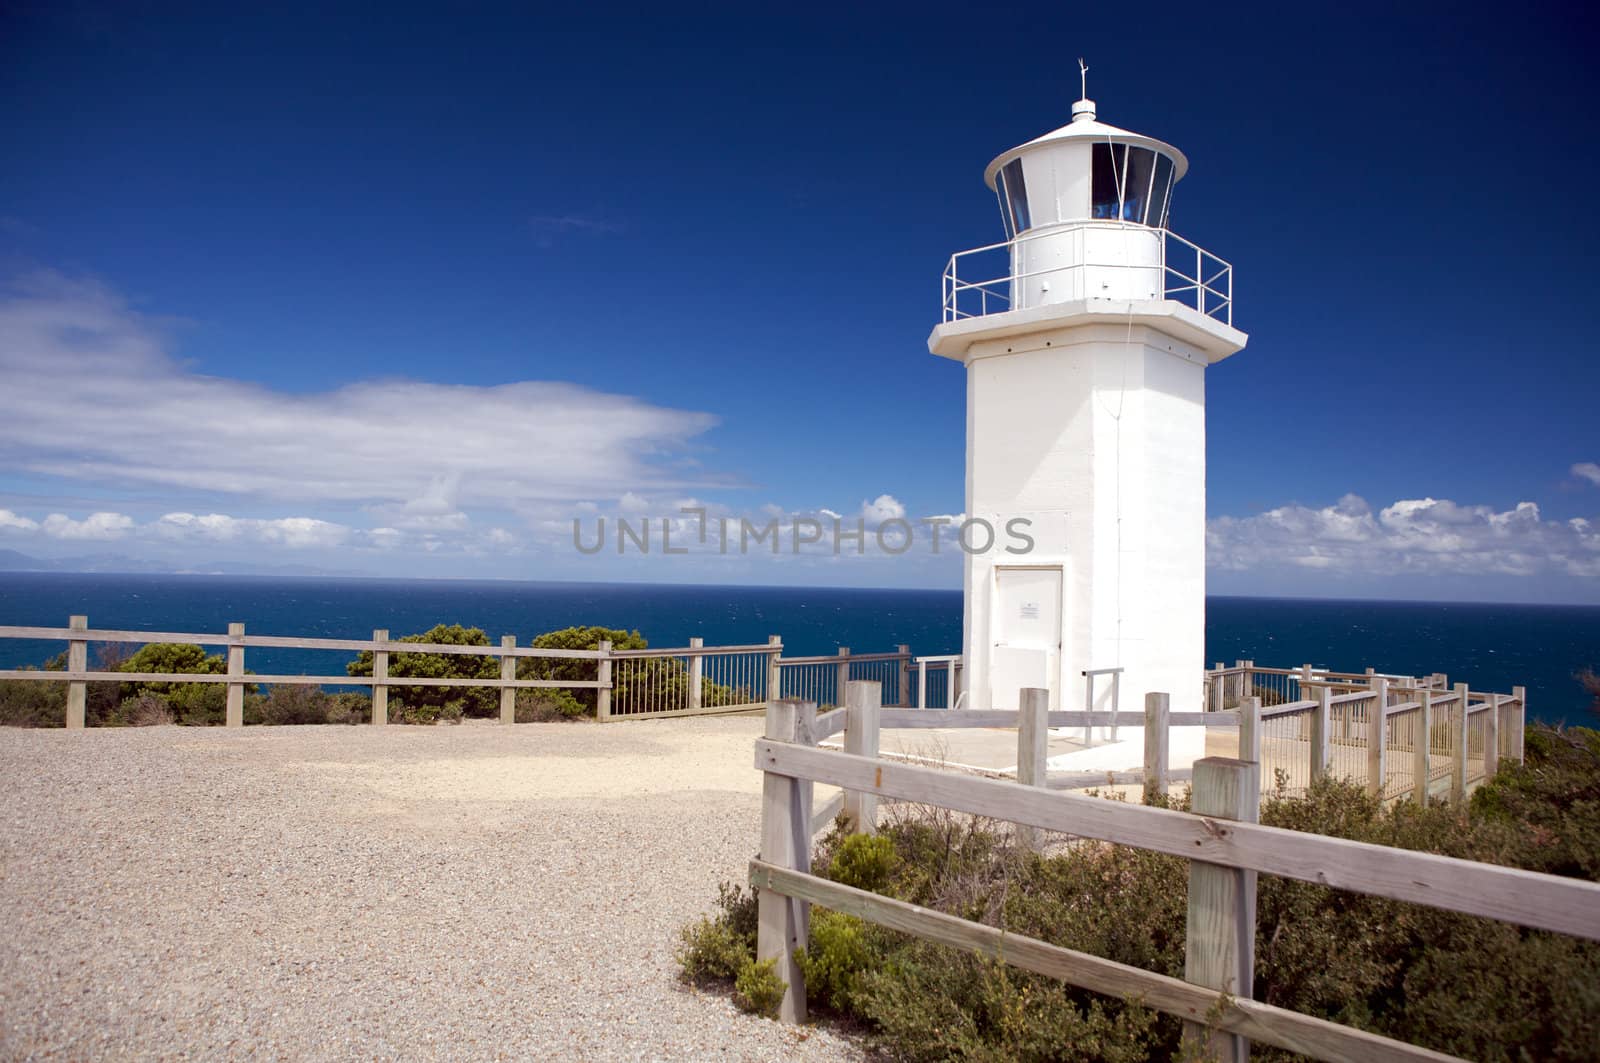 Cape Liptrap lighthouse over looking the sea in Victoria, Australia